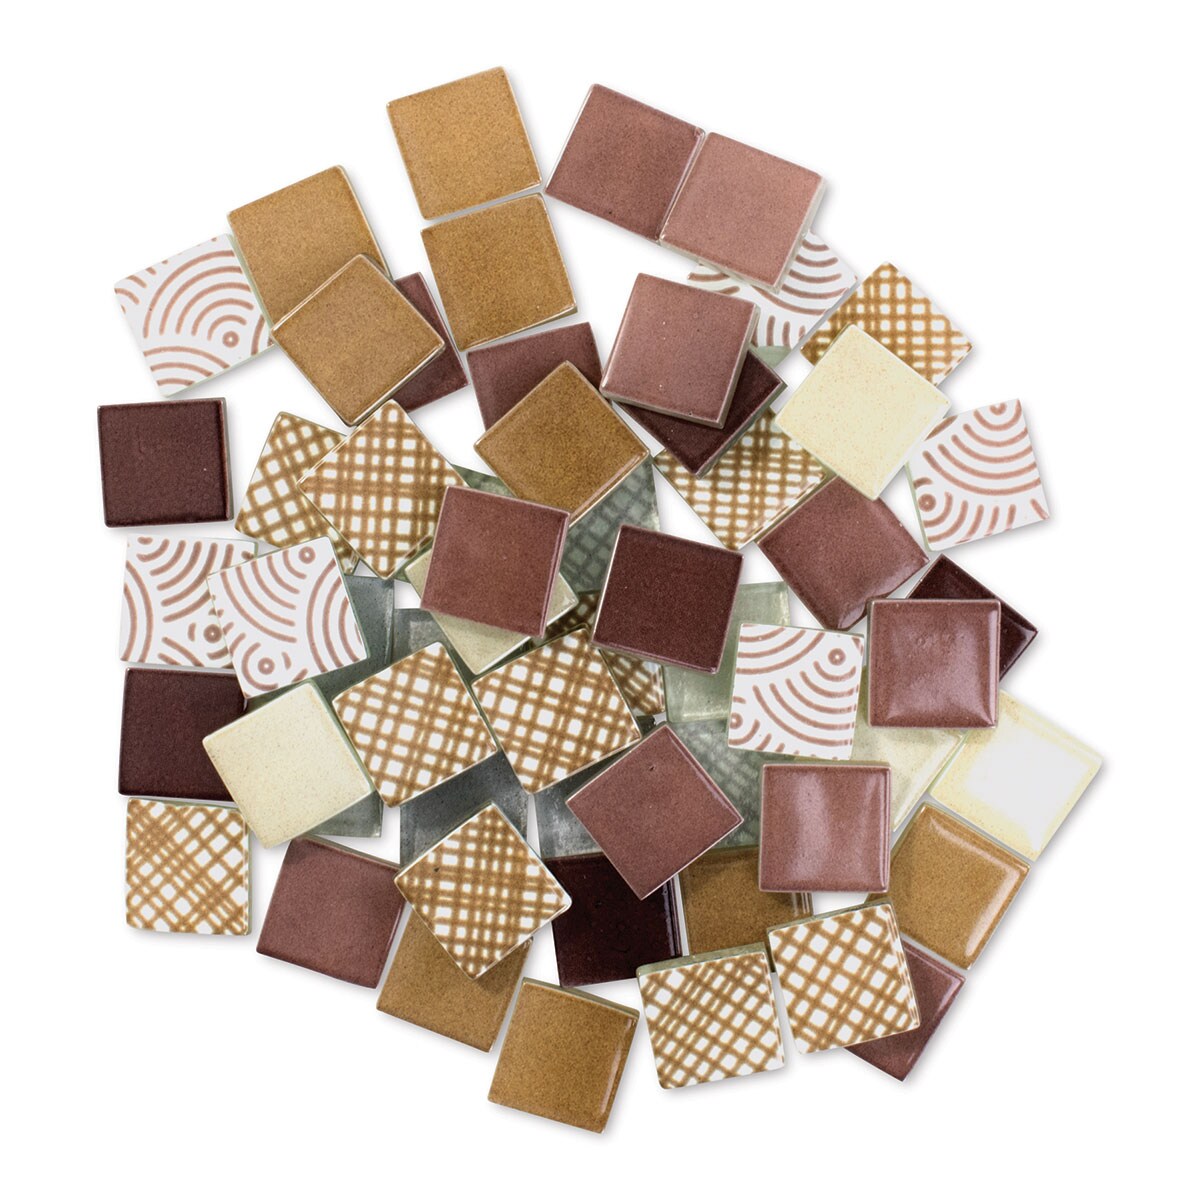 Mosaic Mercantile Patchwork Tiles - Maroon/Tan, 3 lb